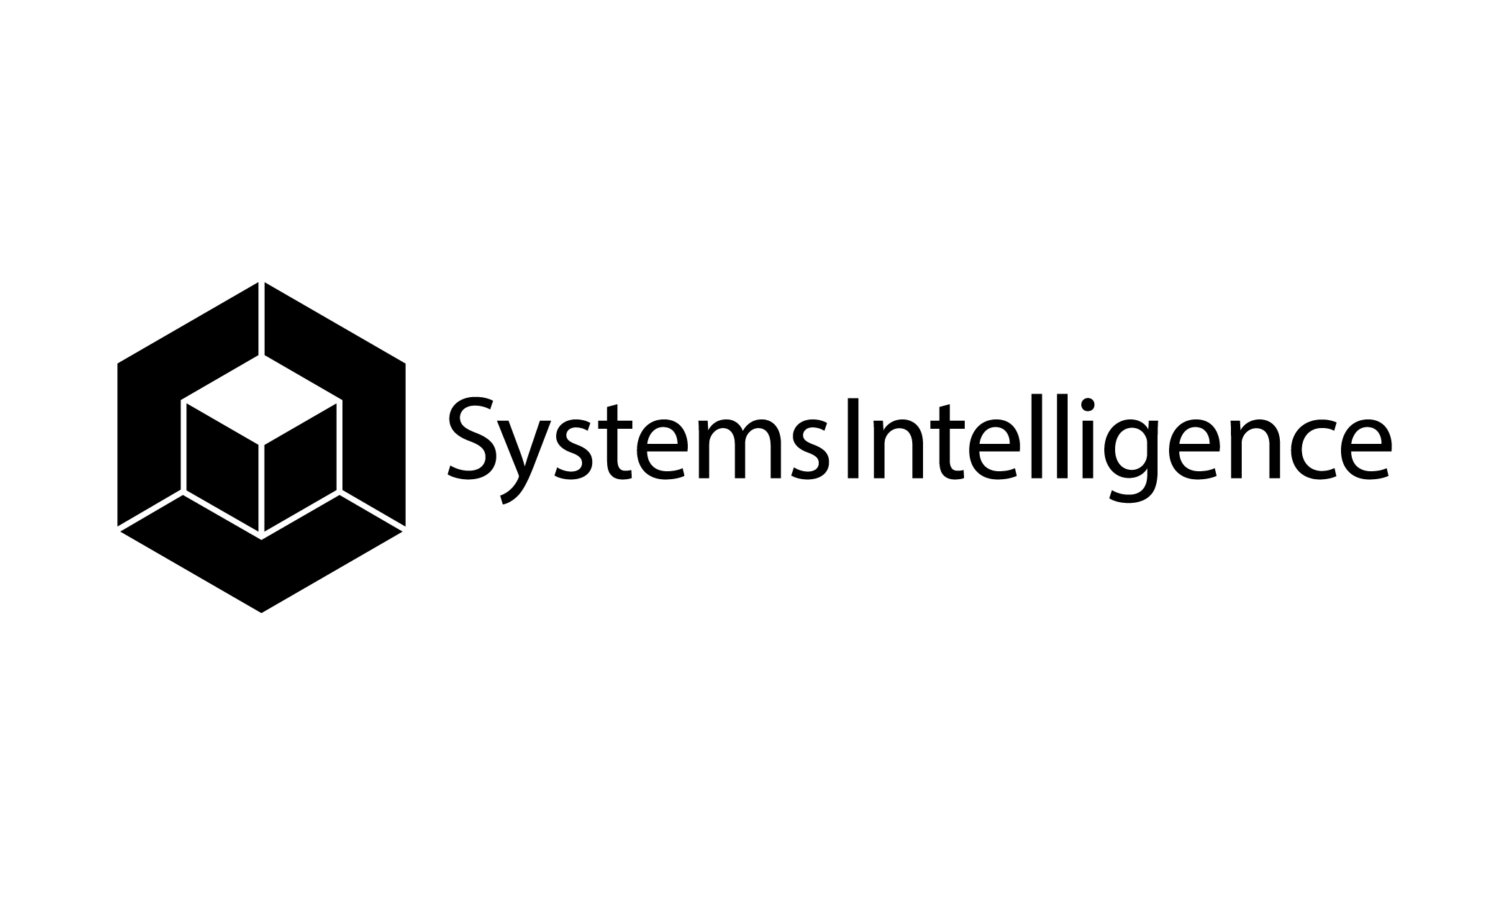 Systems Intelligence logo